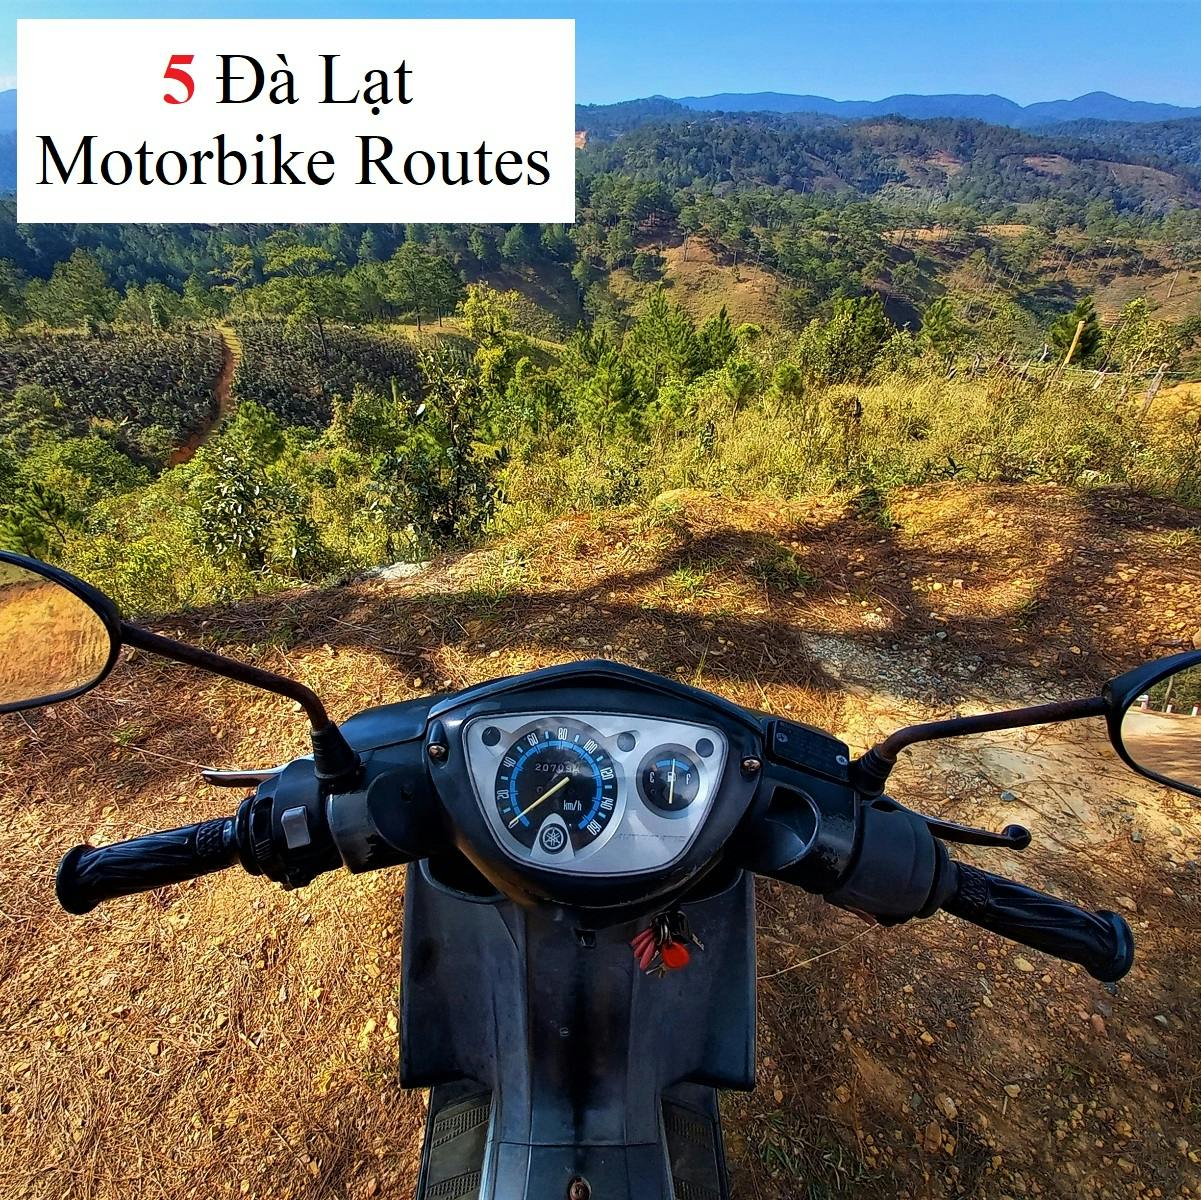 Dalat by Motorbike: 5 Routes & Loops